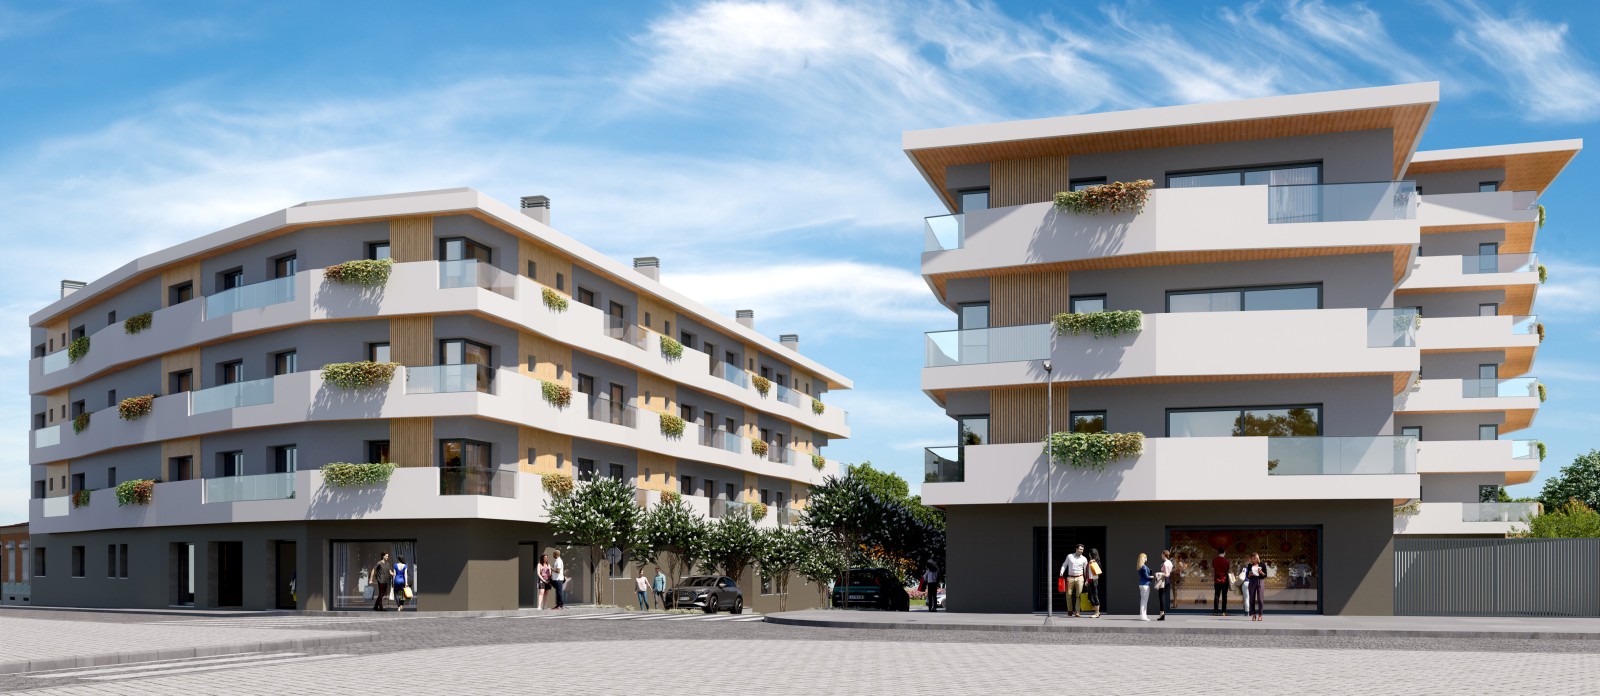 Appartement neuf avec balcon, à vendre, à Ramalde, Porto, Portugal_227304